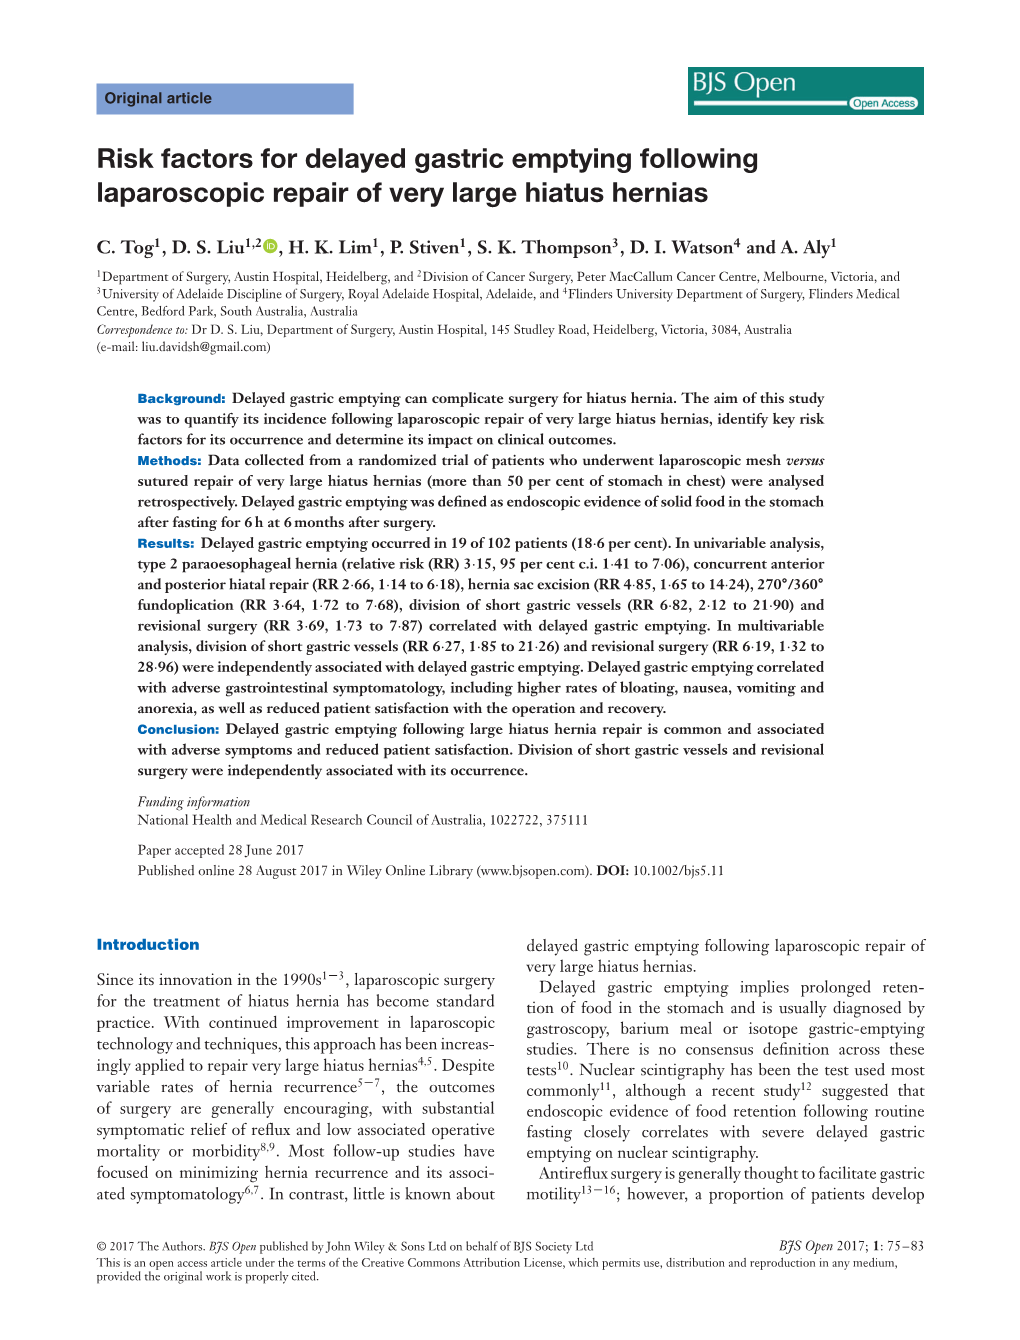 Risk Factors for Delayed Gastric Emptying Following Laparoscopic Repair of Very Large Hiatus Hernias: Gastroparesis Post Hiatal